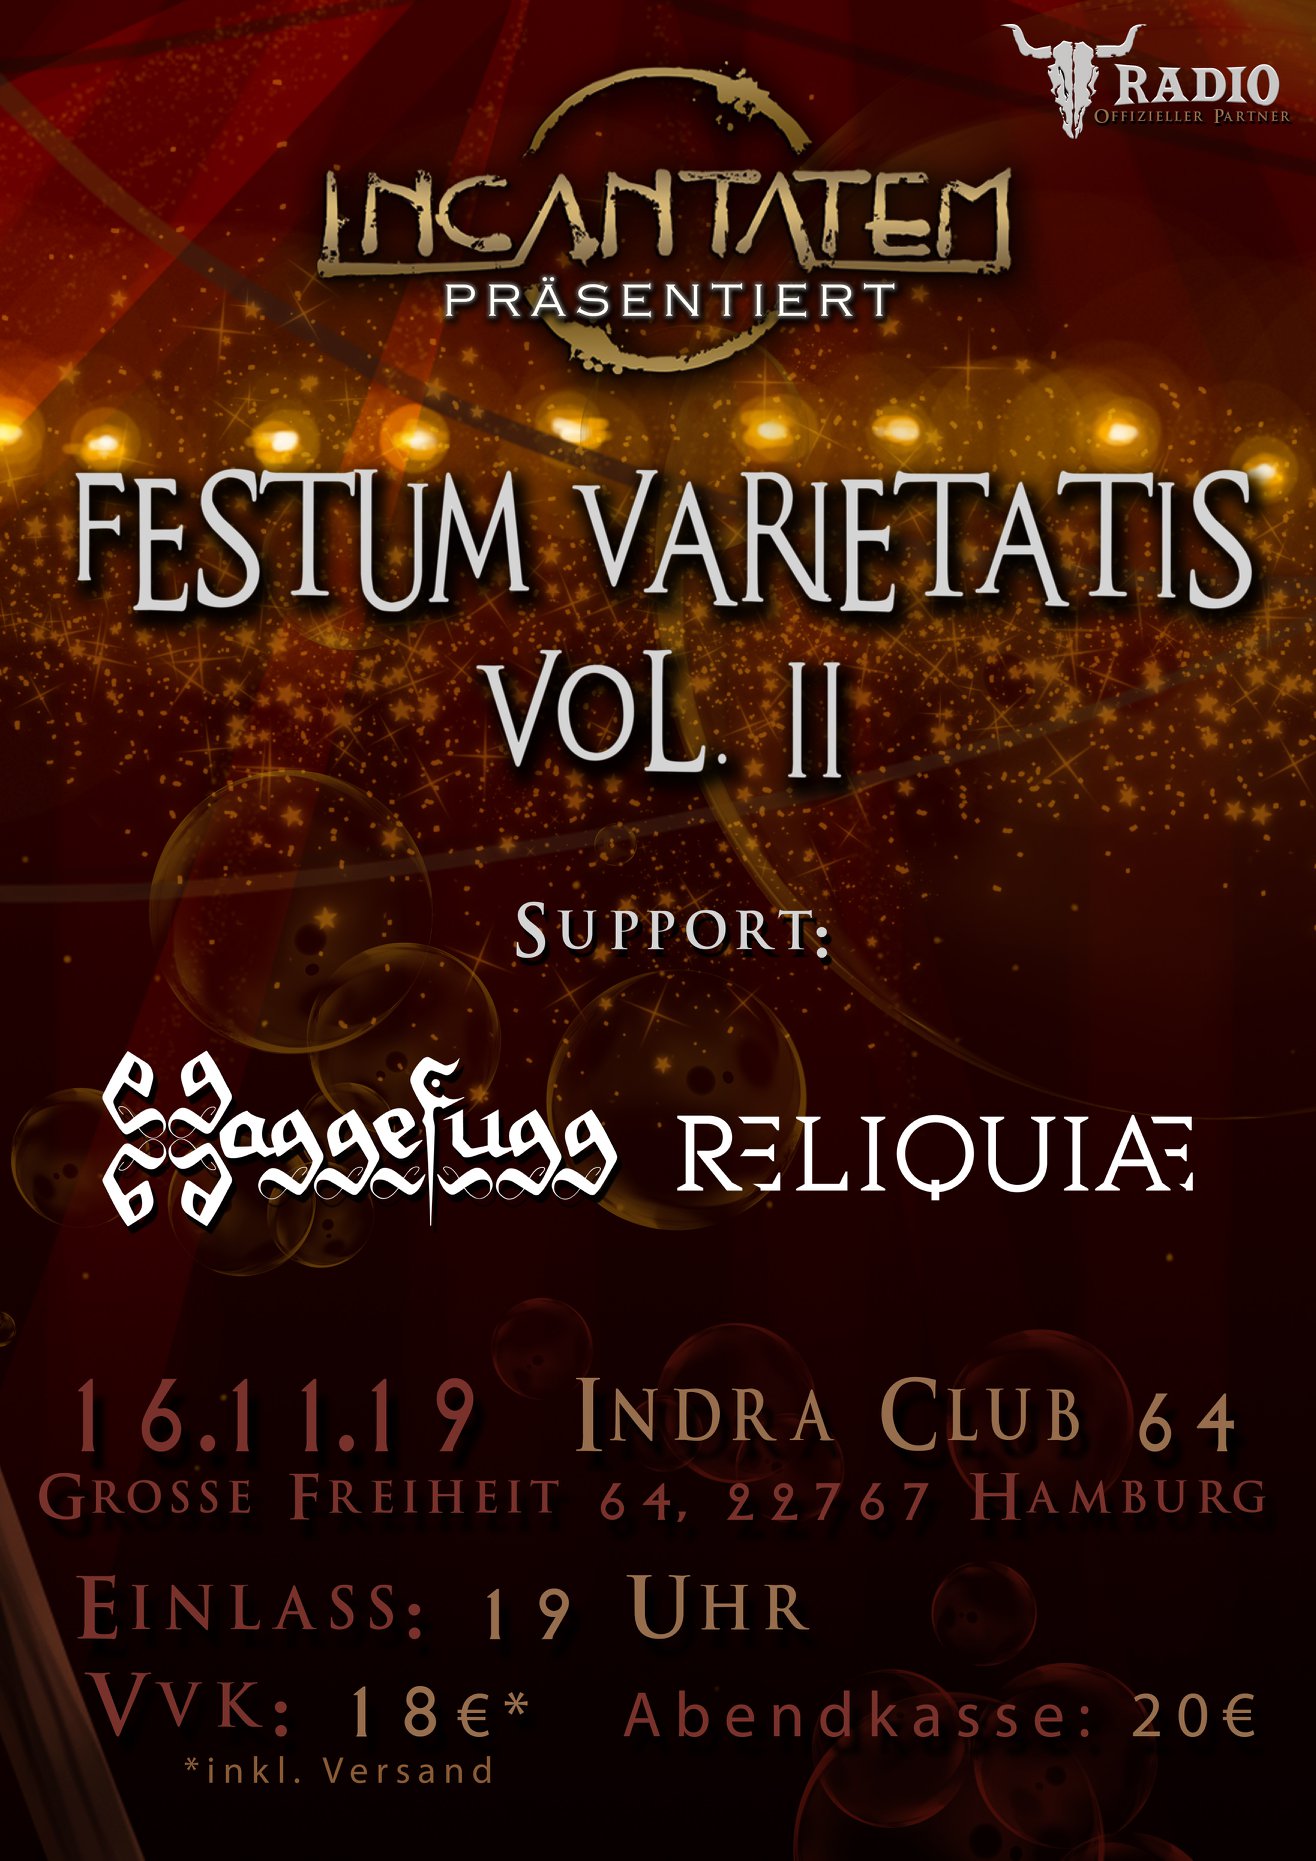 Festum Varietatis vol. II